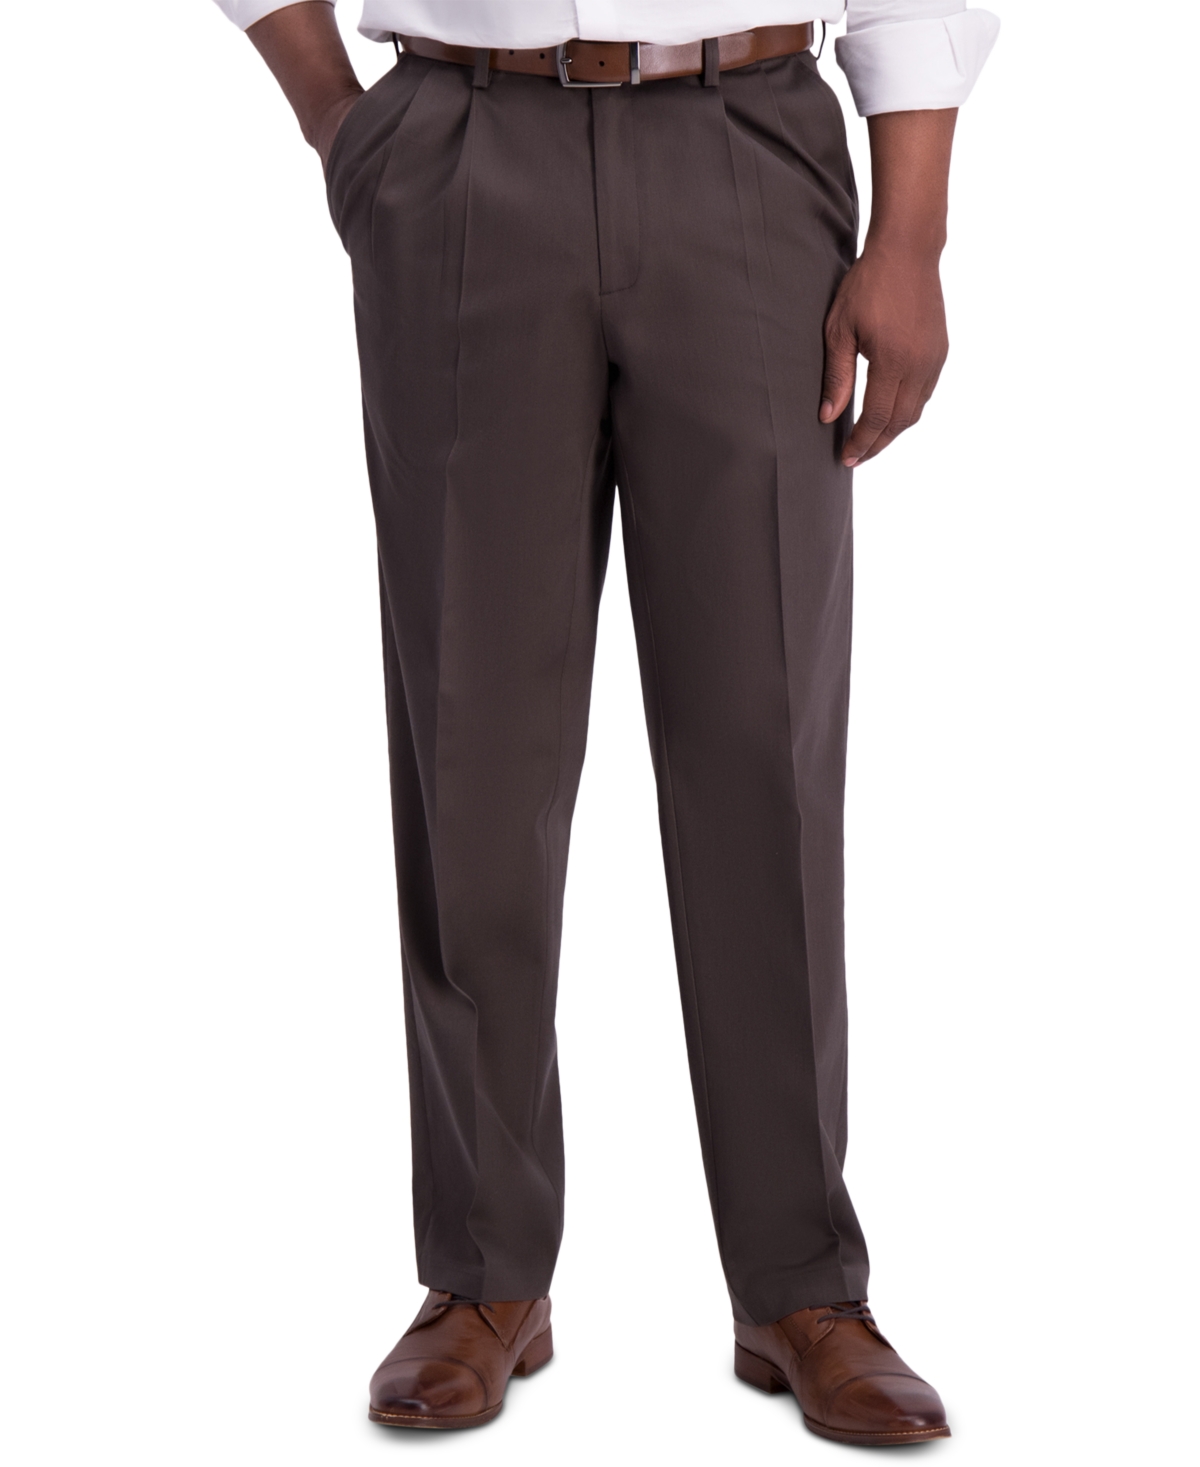 Men's Iron Free Premium Khaki Classic-Fit Pleated Pant - Sand